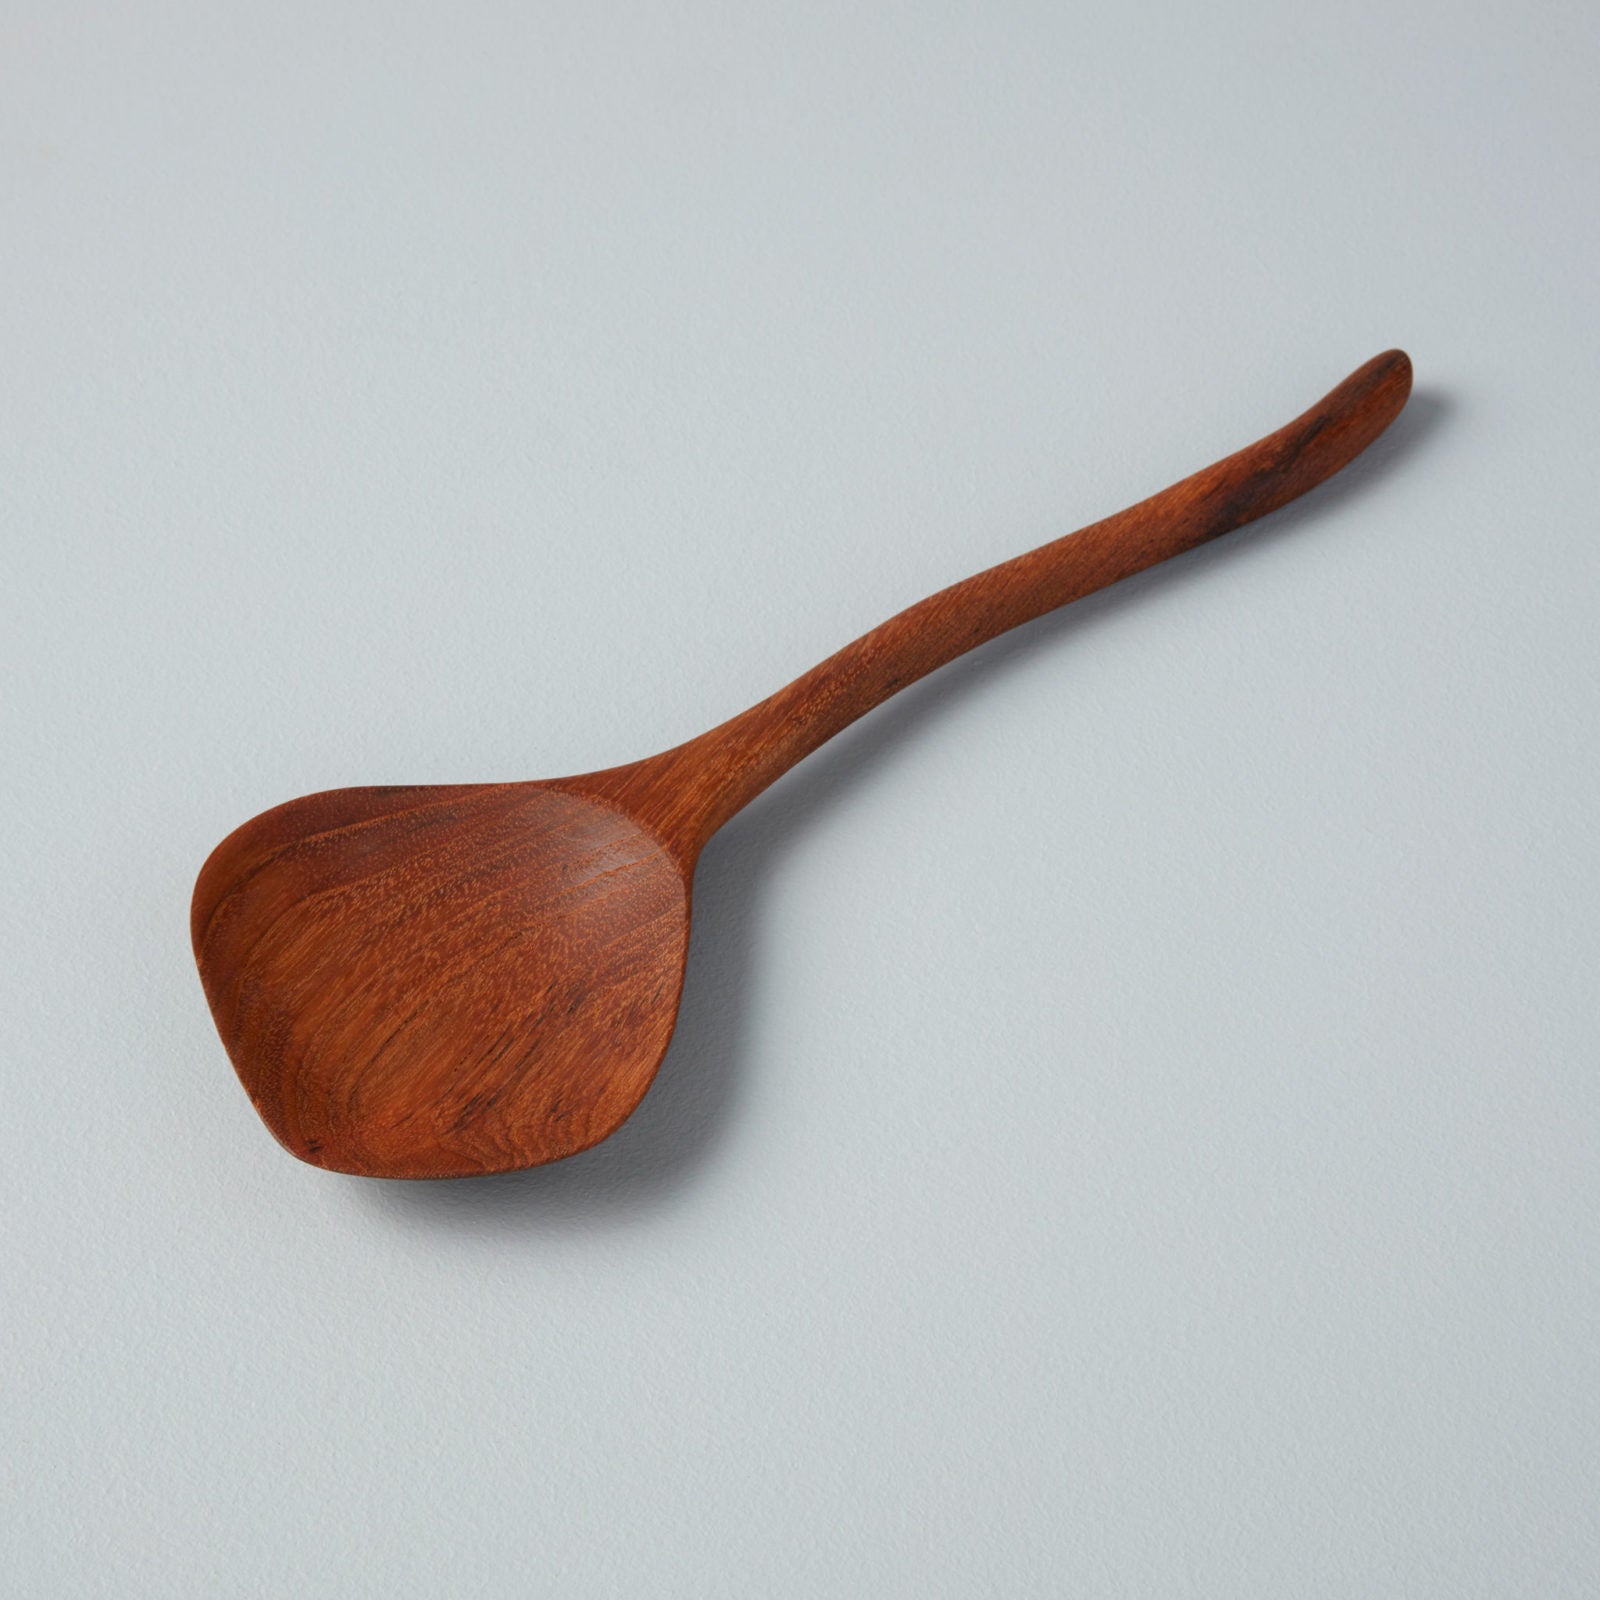 Natural Shaped Spoon